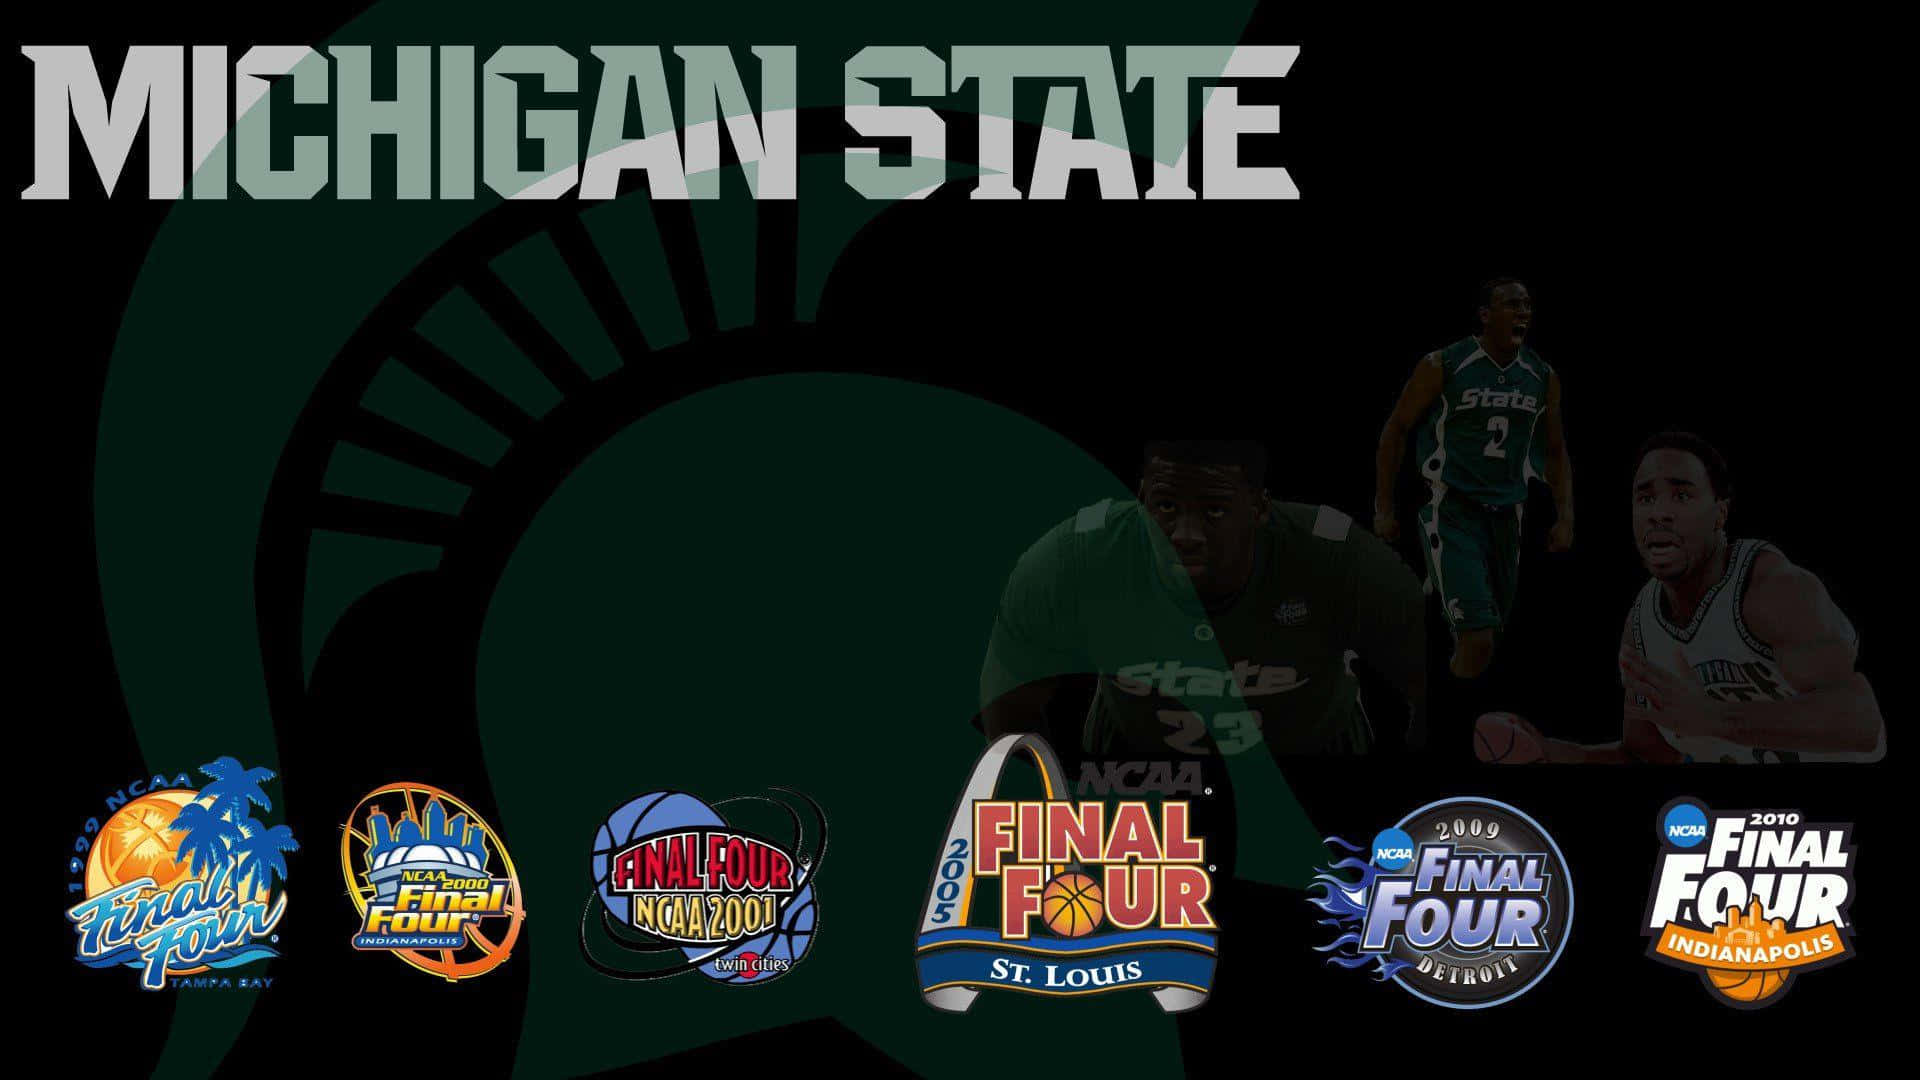 "Go Green, Go White: The Michigan State Spartans" Wallpaper